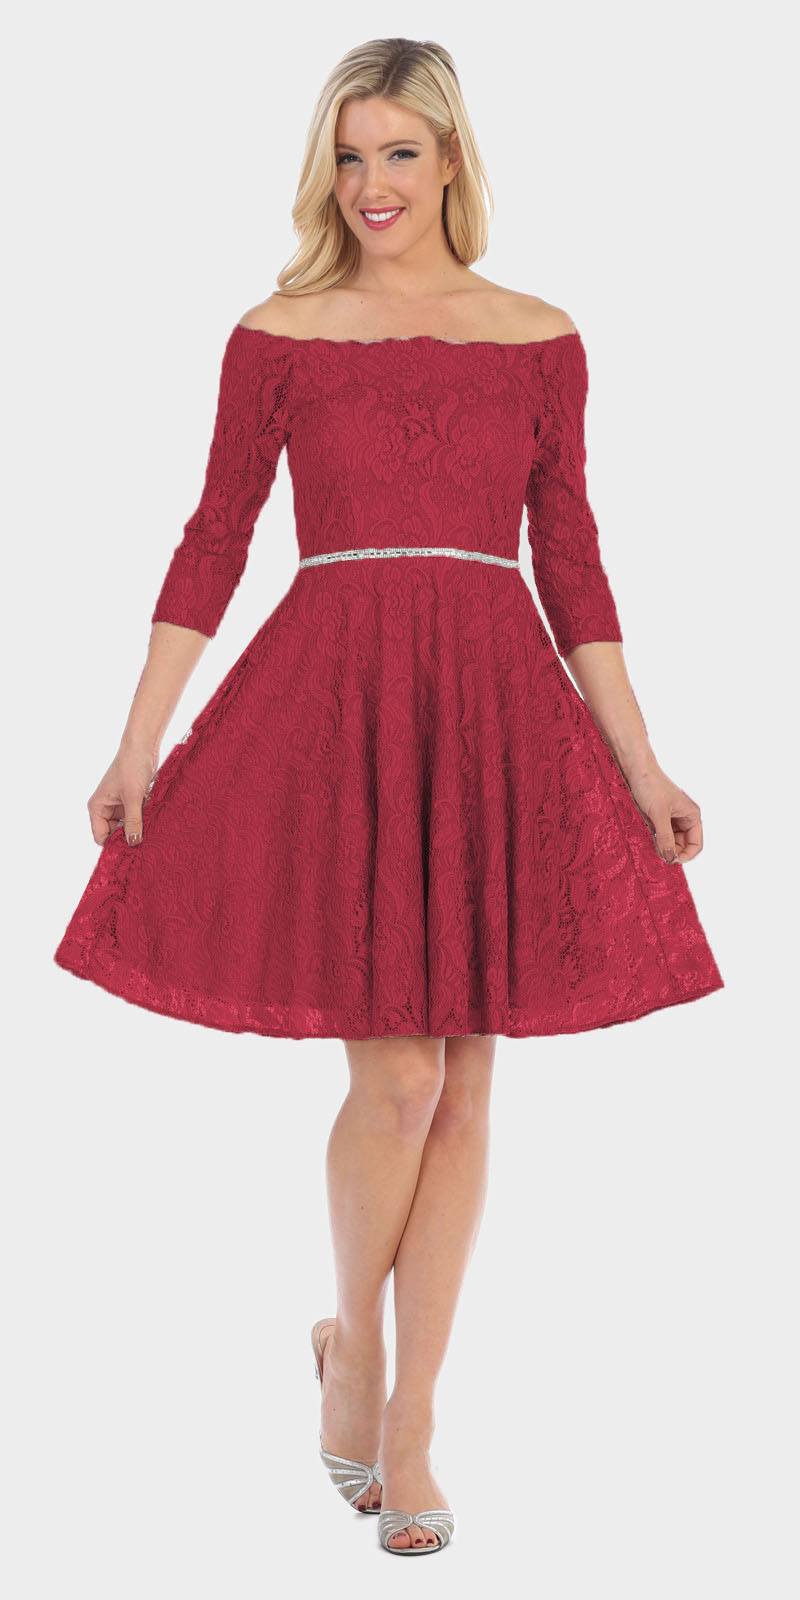 Celavie 6343 Off-the-Shoulder Short Lace Homecoming Dress Burgundy